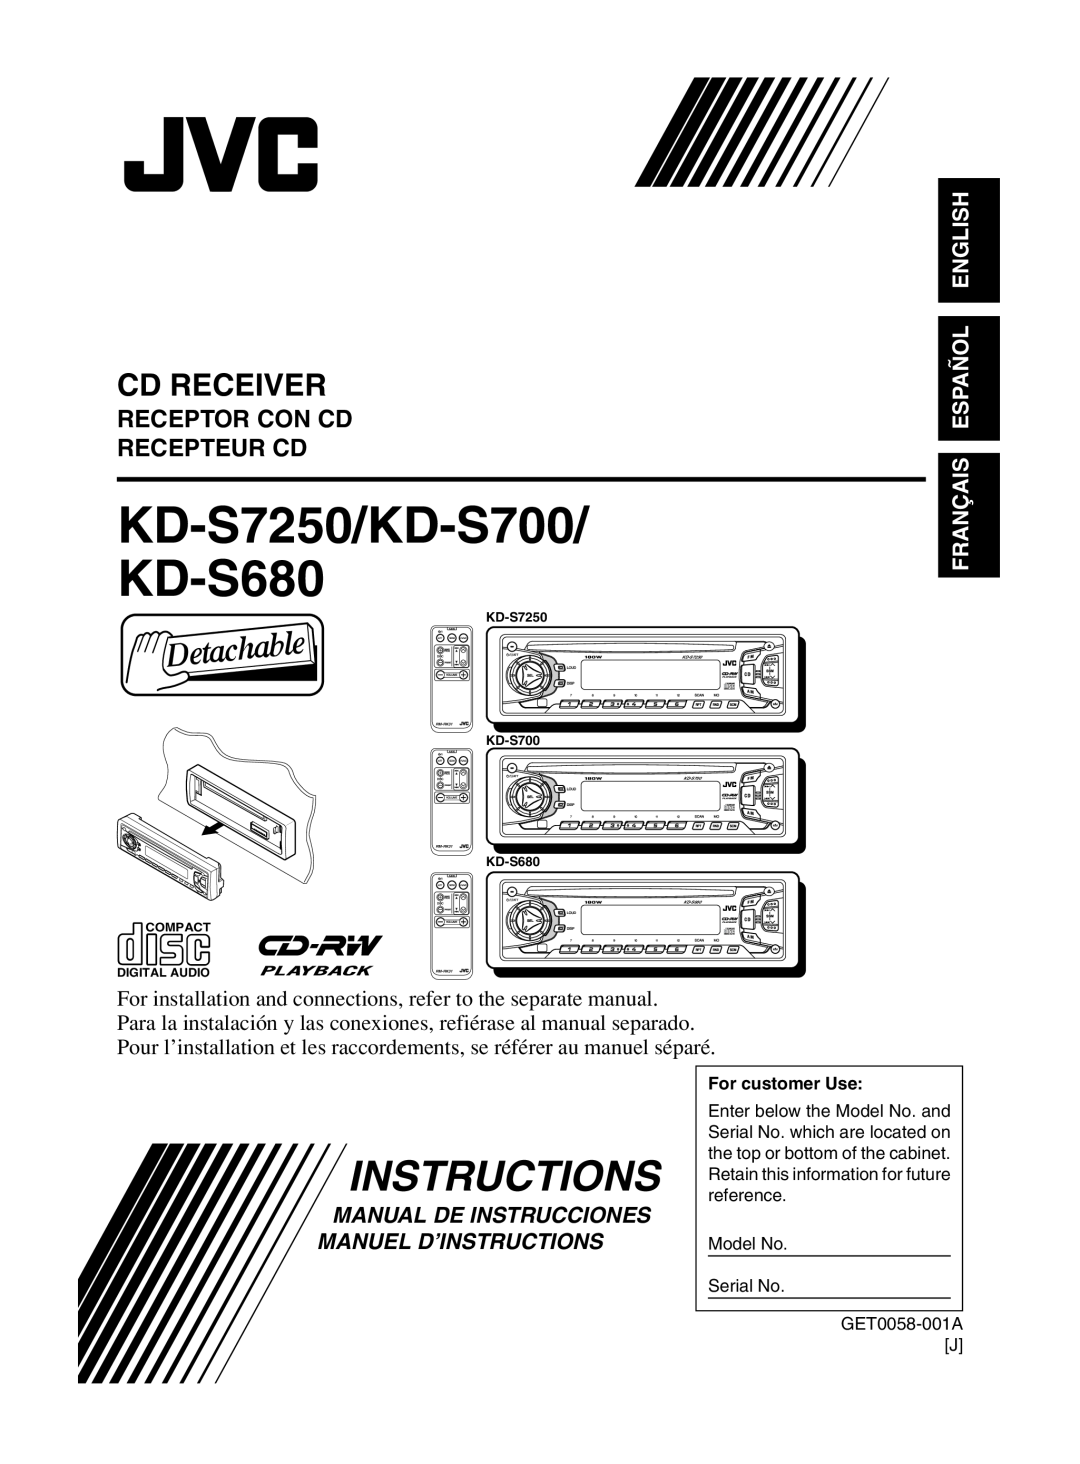 JVC manual Cd Receiver, Receptor Con Cd Recepteur Cd, Français Español English, KD-S7250/KD-S700 KD-S680, Instructions 